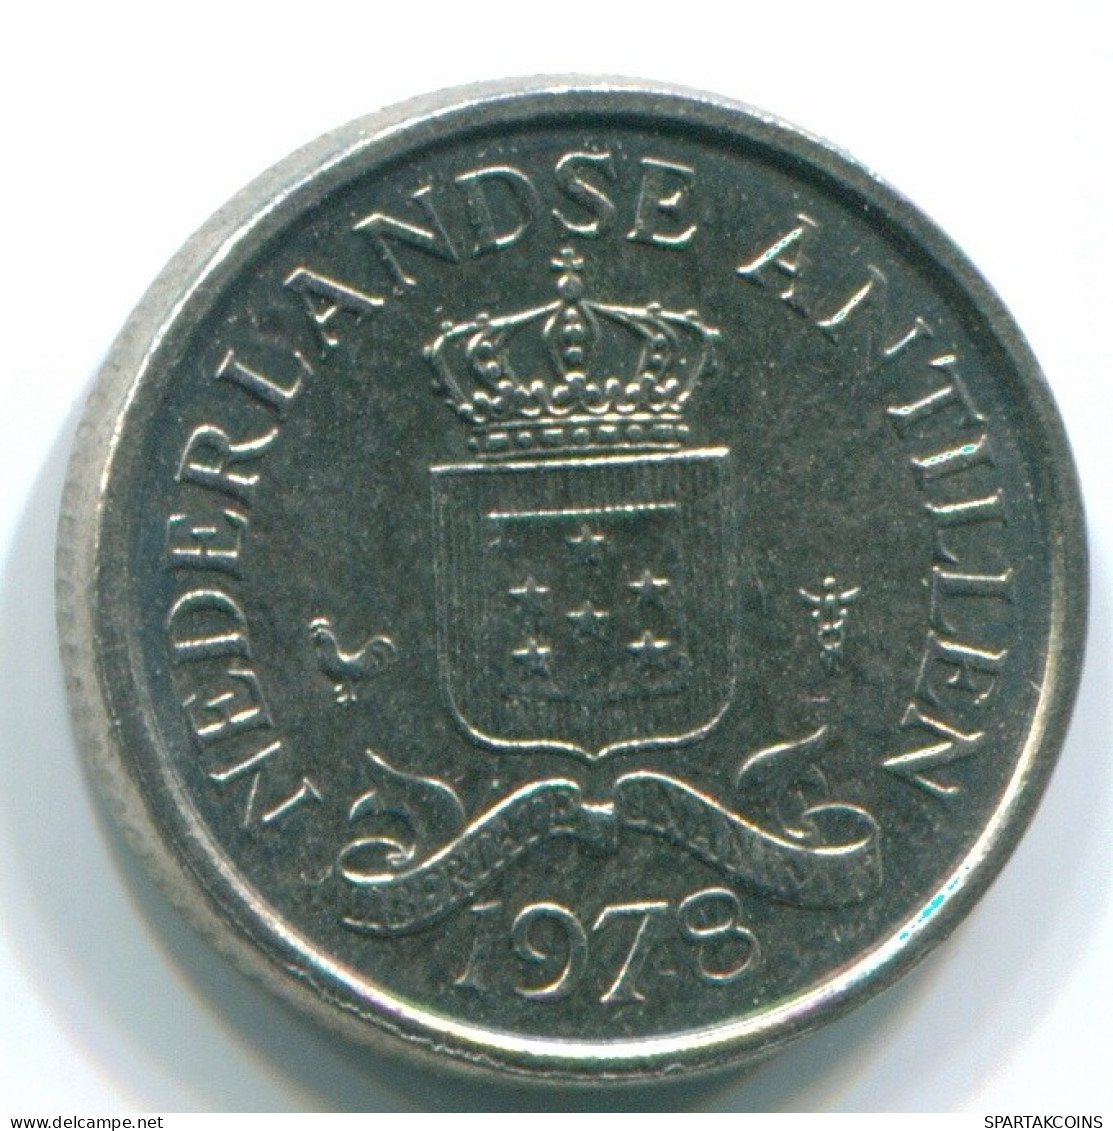 10 CENTS 1978 NETHERLANDS ANTILLES Nickel Colonial Coin #S13565.U.A - Antilles Néerlandaises